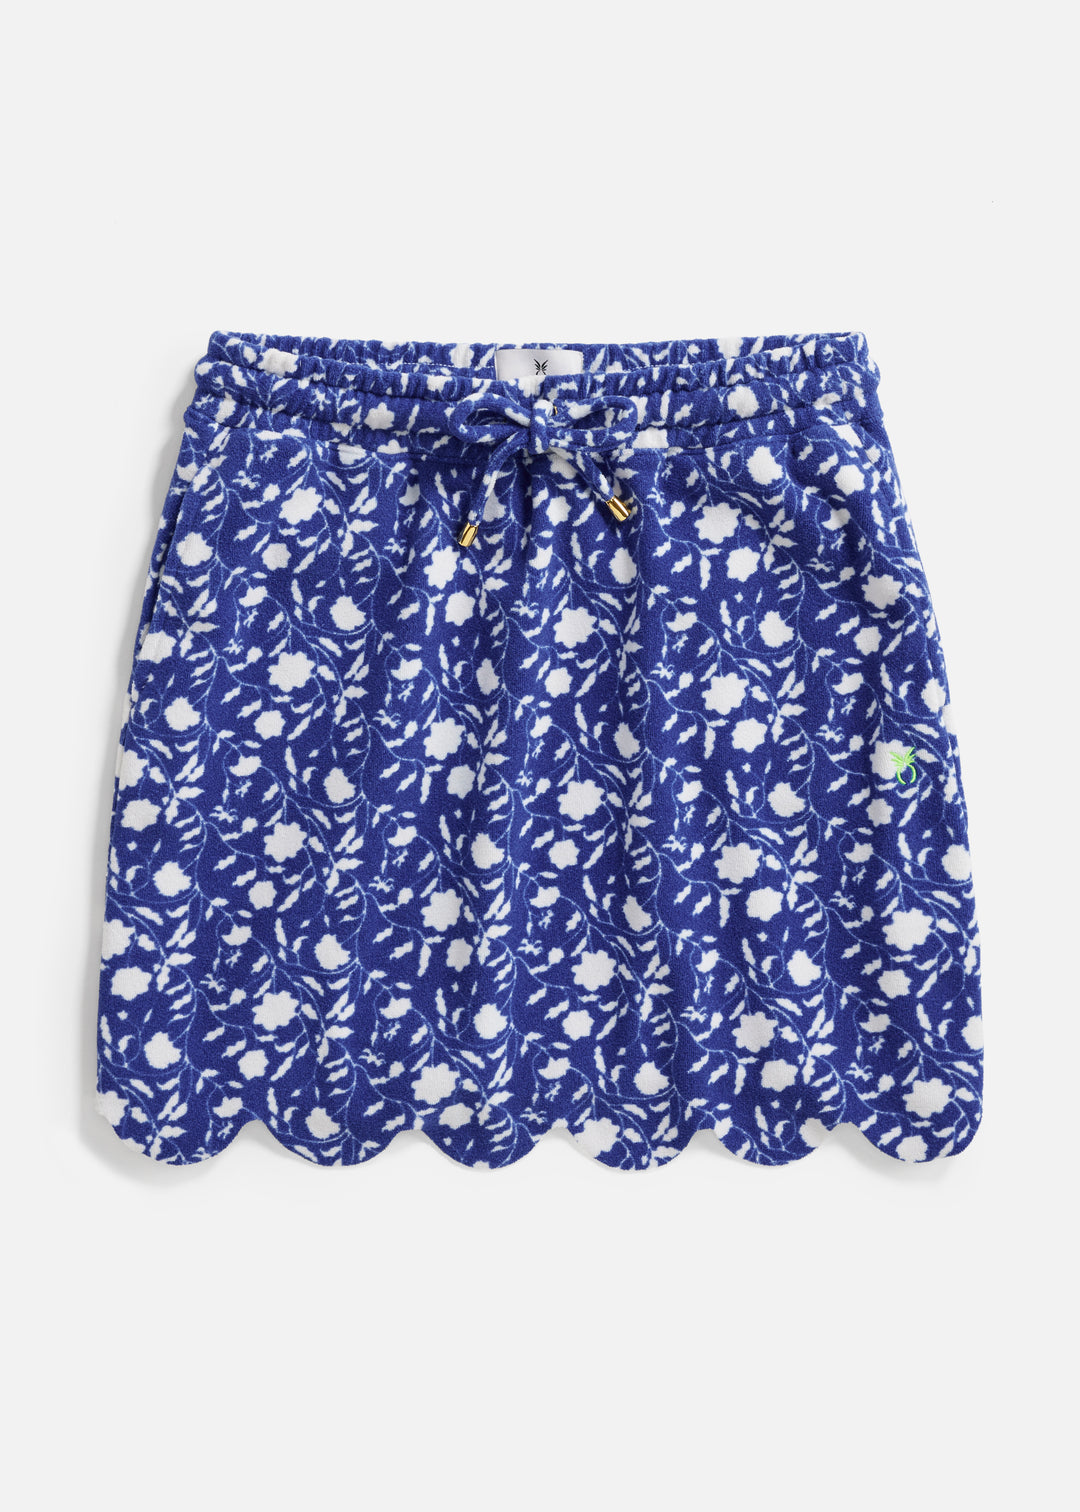 Starboard Skirt in Terry Fleece (Blue Floral)